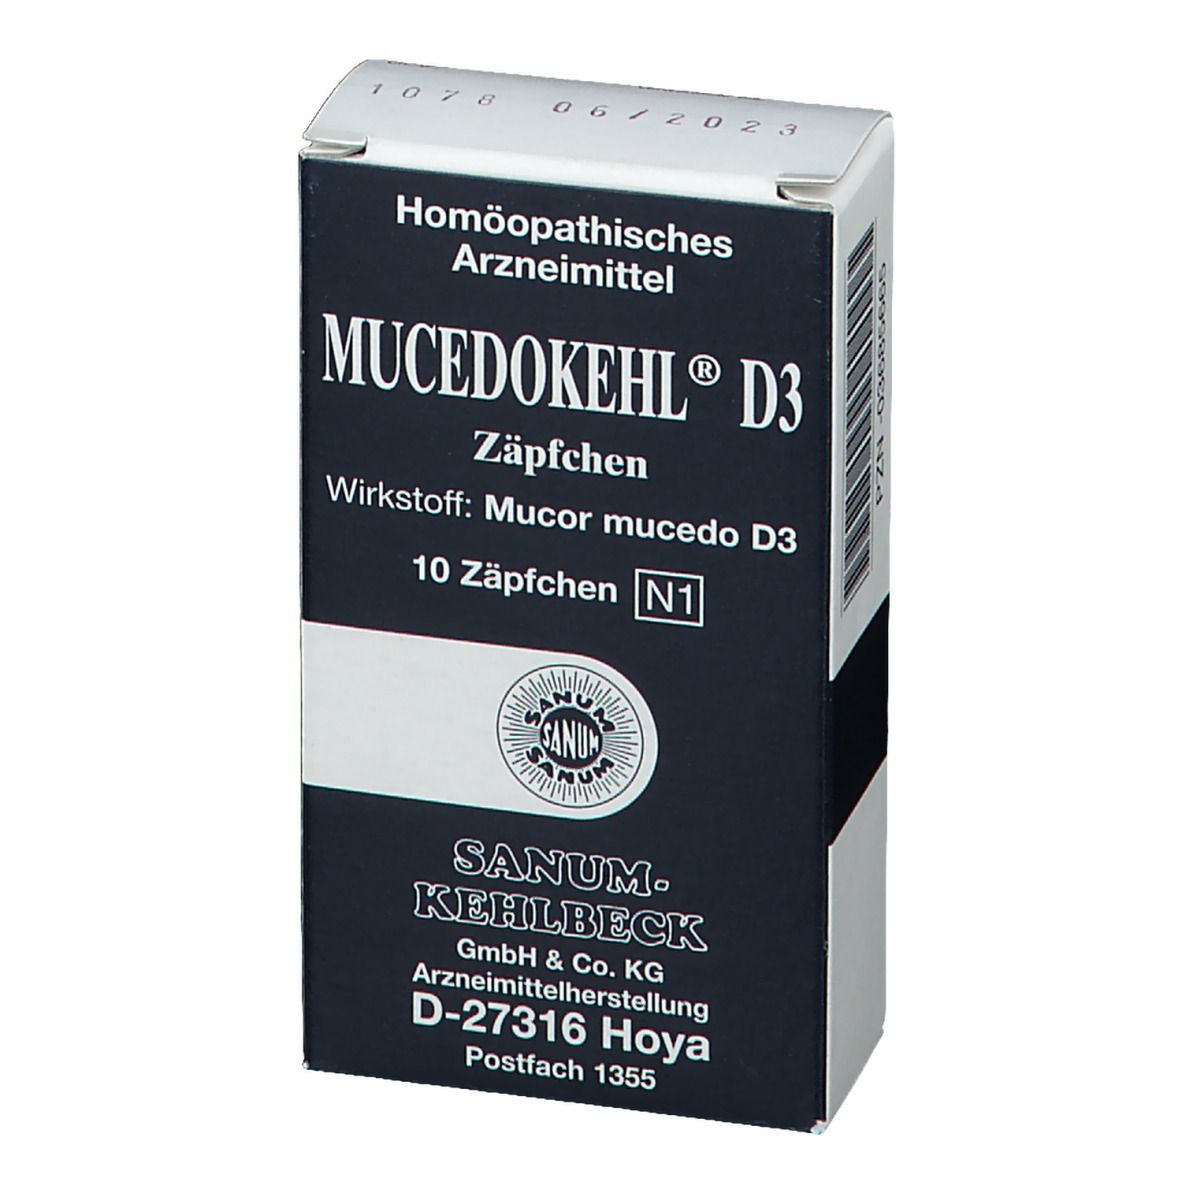 Mucedokehl® D3 Suppositorien